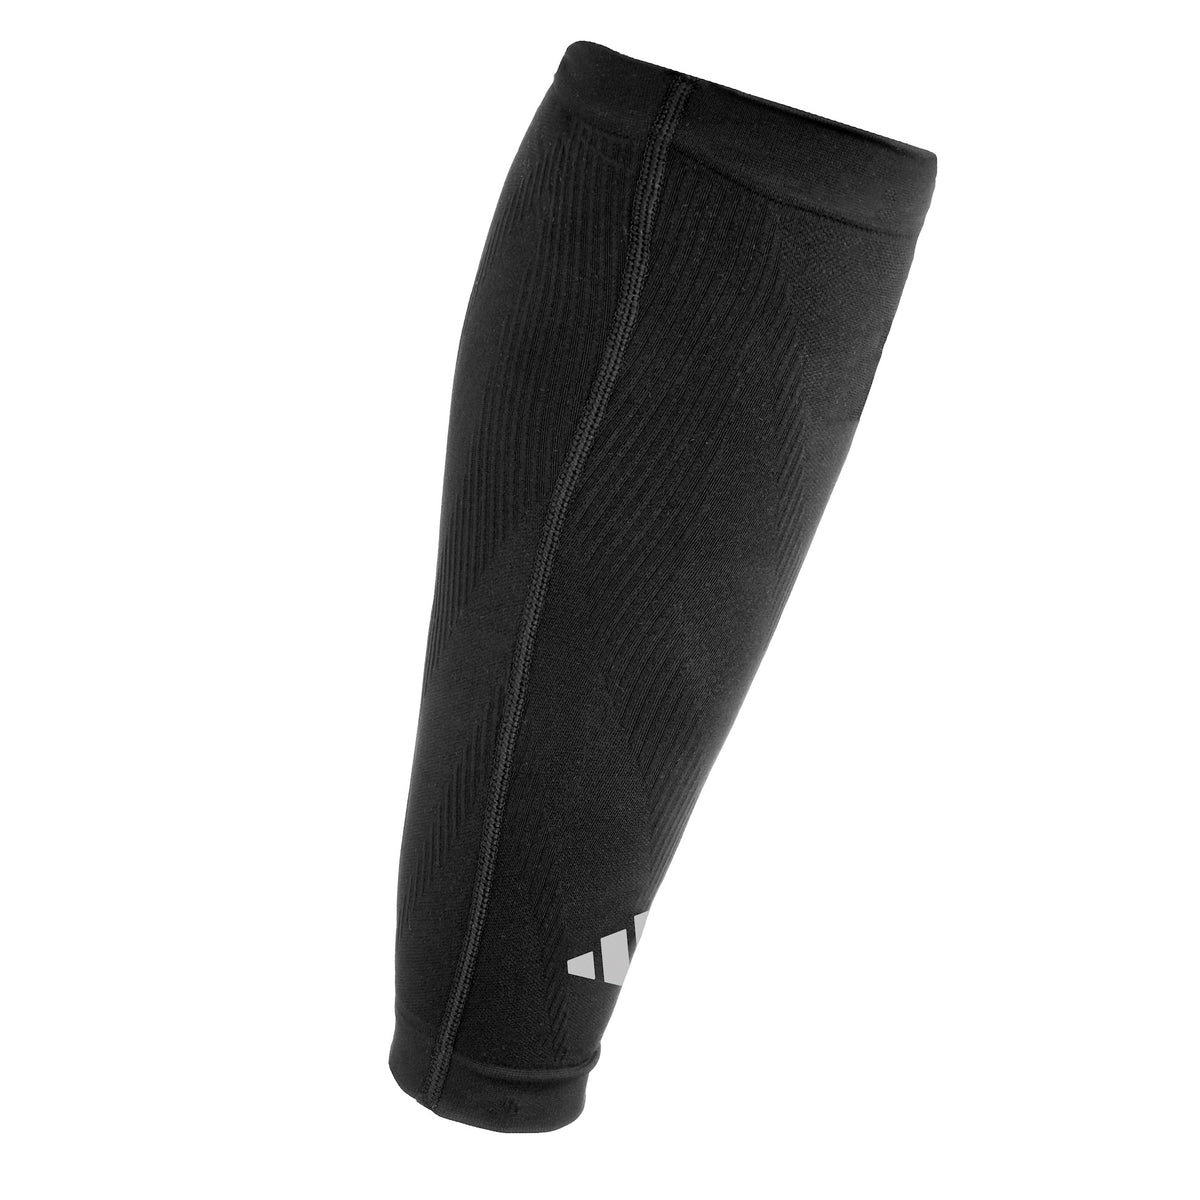 ADIDAS / REEBOK Adidas COMPRESSION - Calf Sleeves - Men's - black